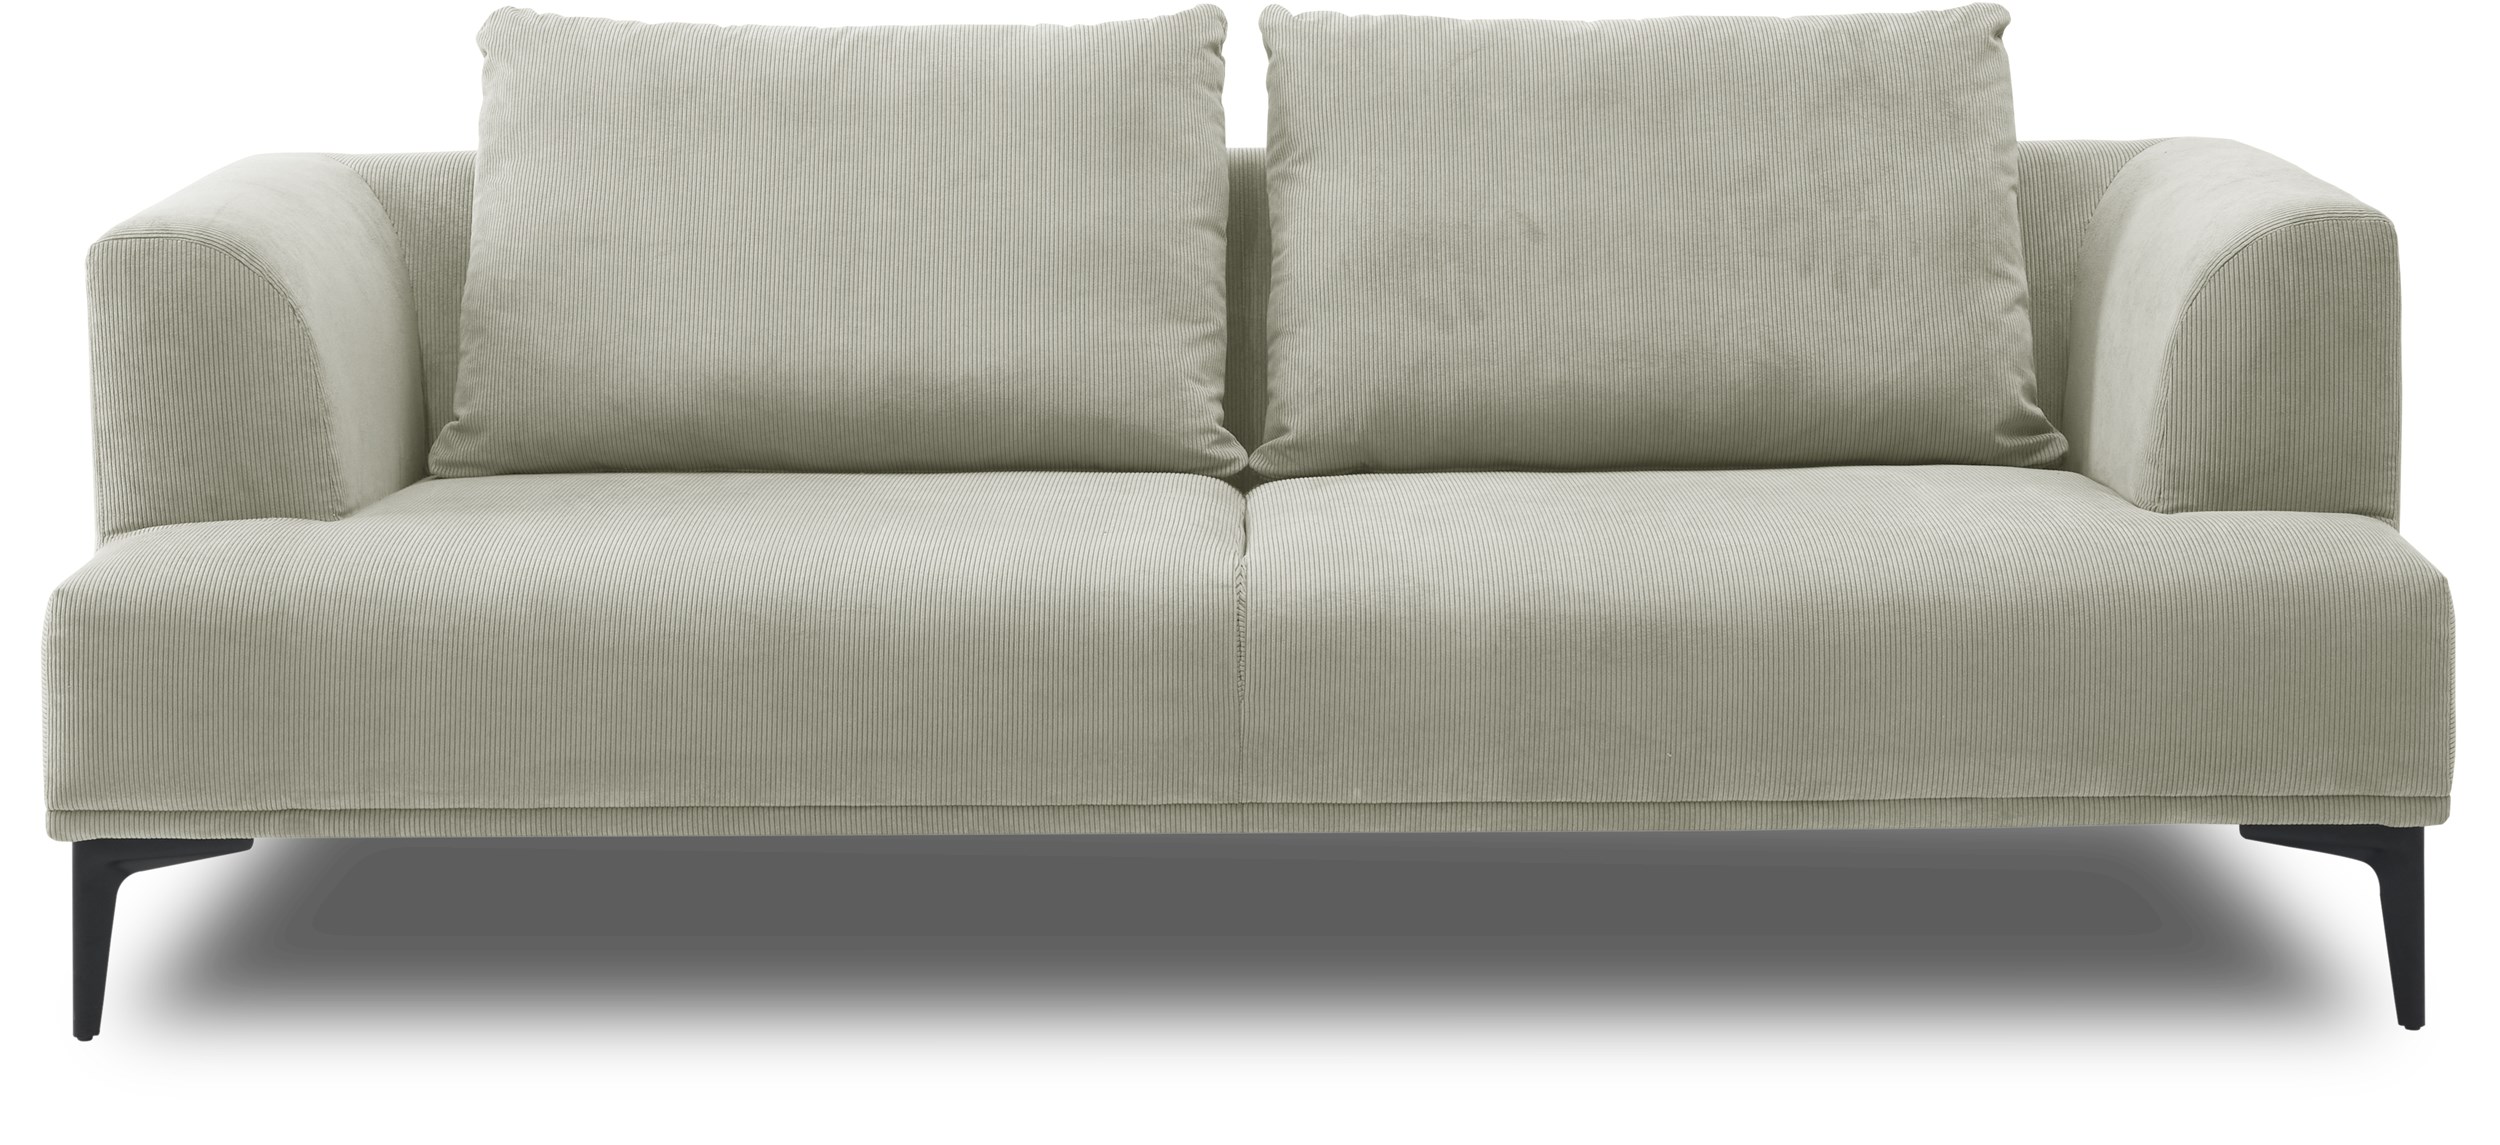 Reggio 2½ pers. Sofa - Jump 1954 Offwhite stof og ben i sort metal